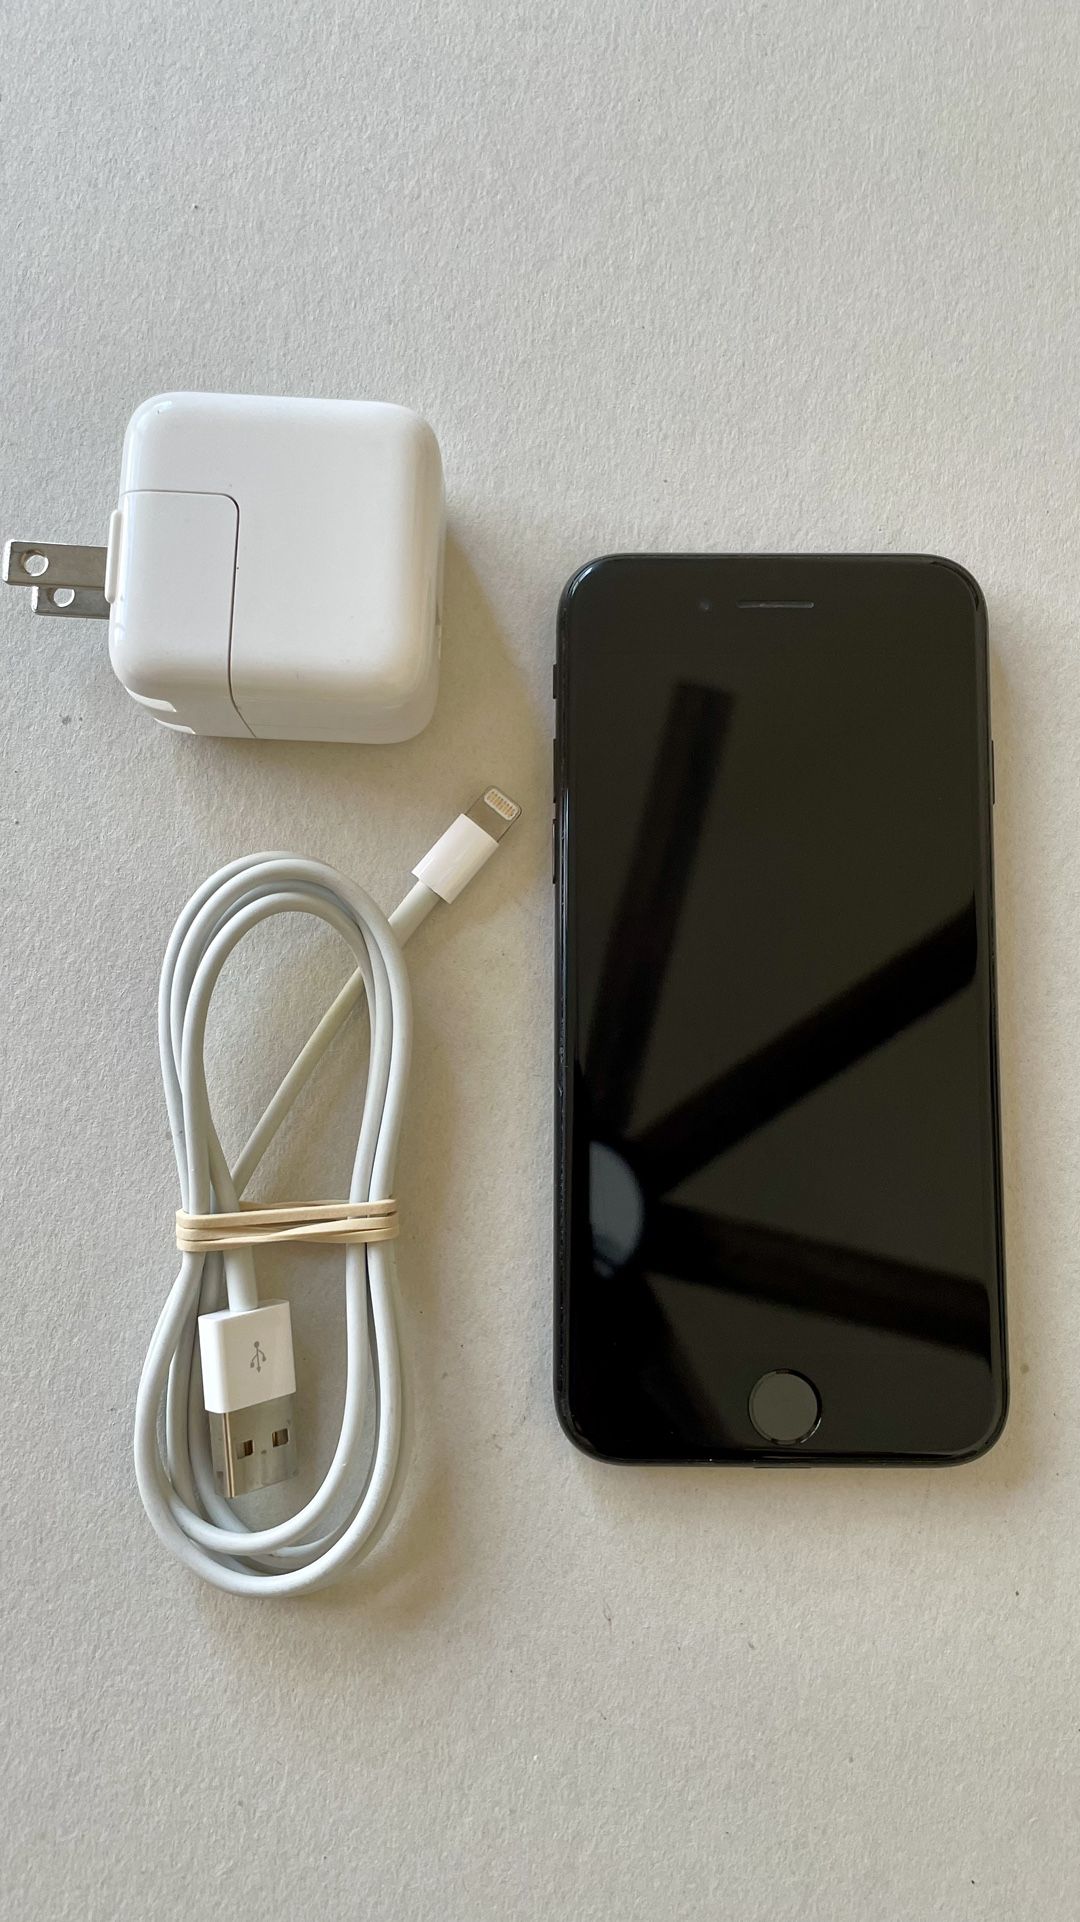 Apple iPhone 7 + Apple Battery Case